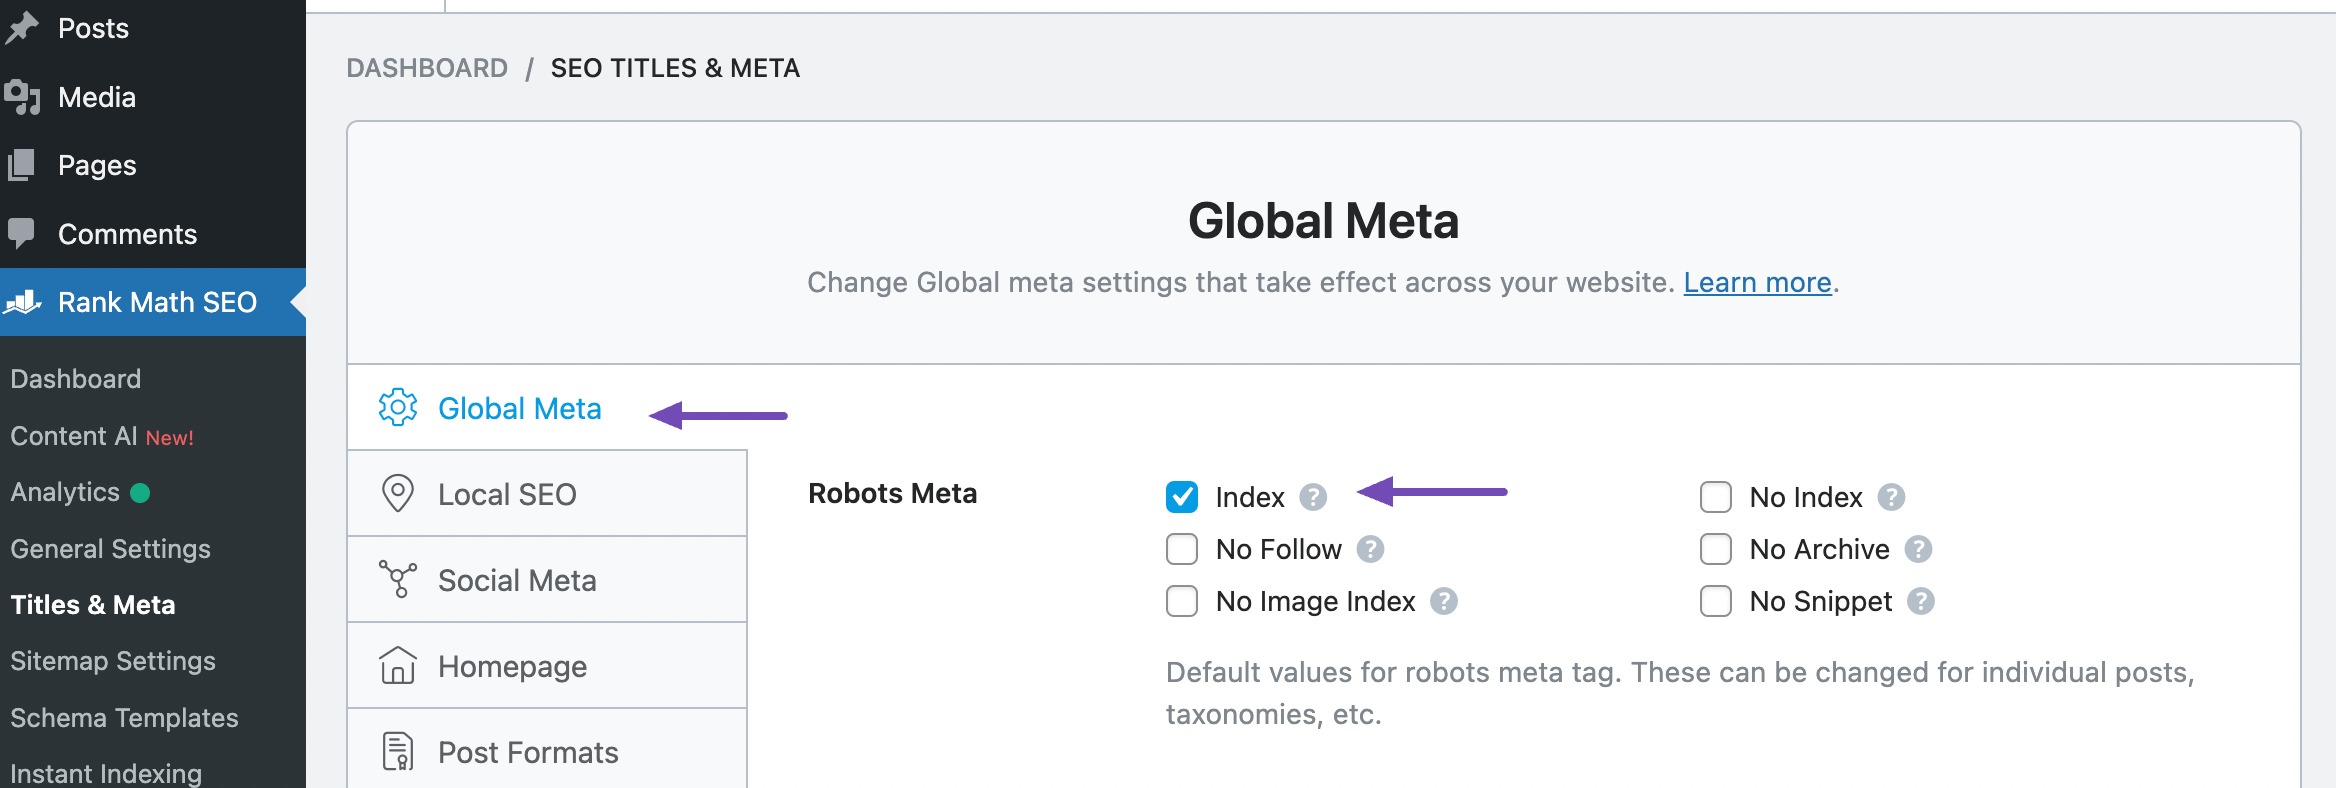 Globalna meta ustawiona na indeks